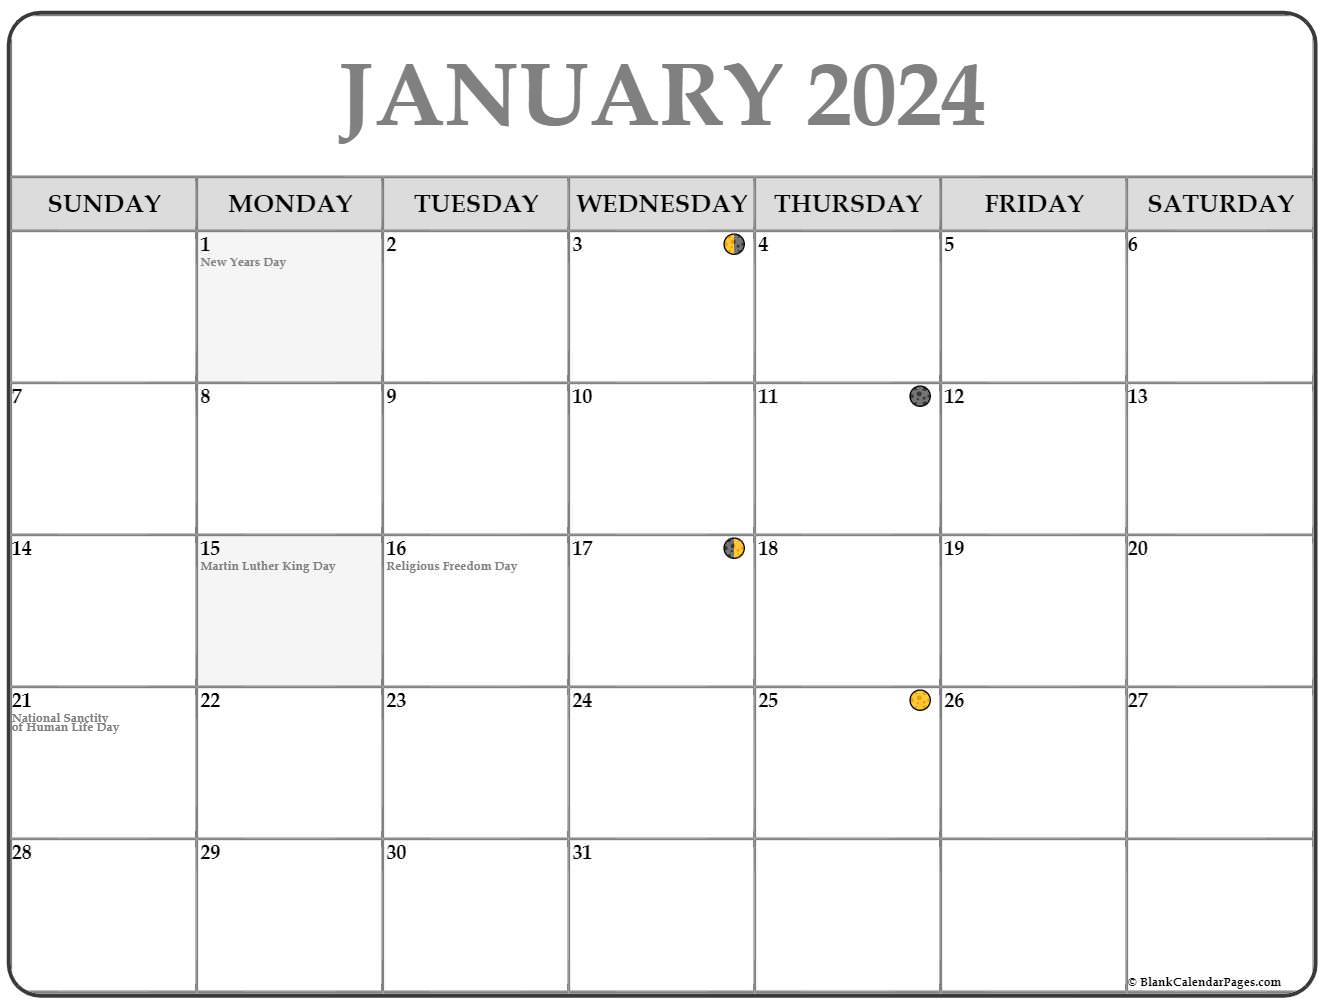 January 2021 calendar | 56+ templates of 2021 printable ...